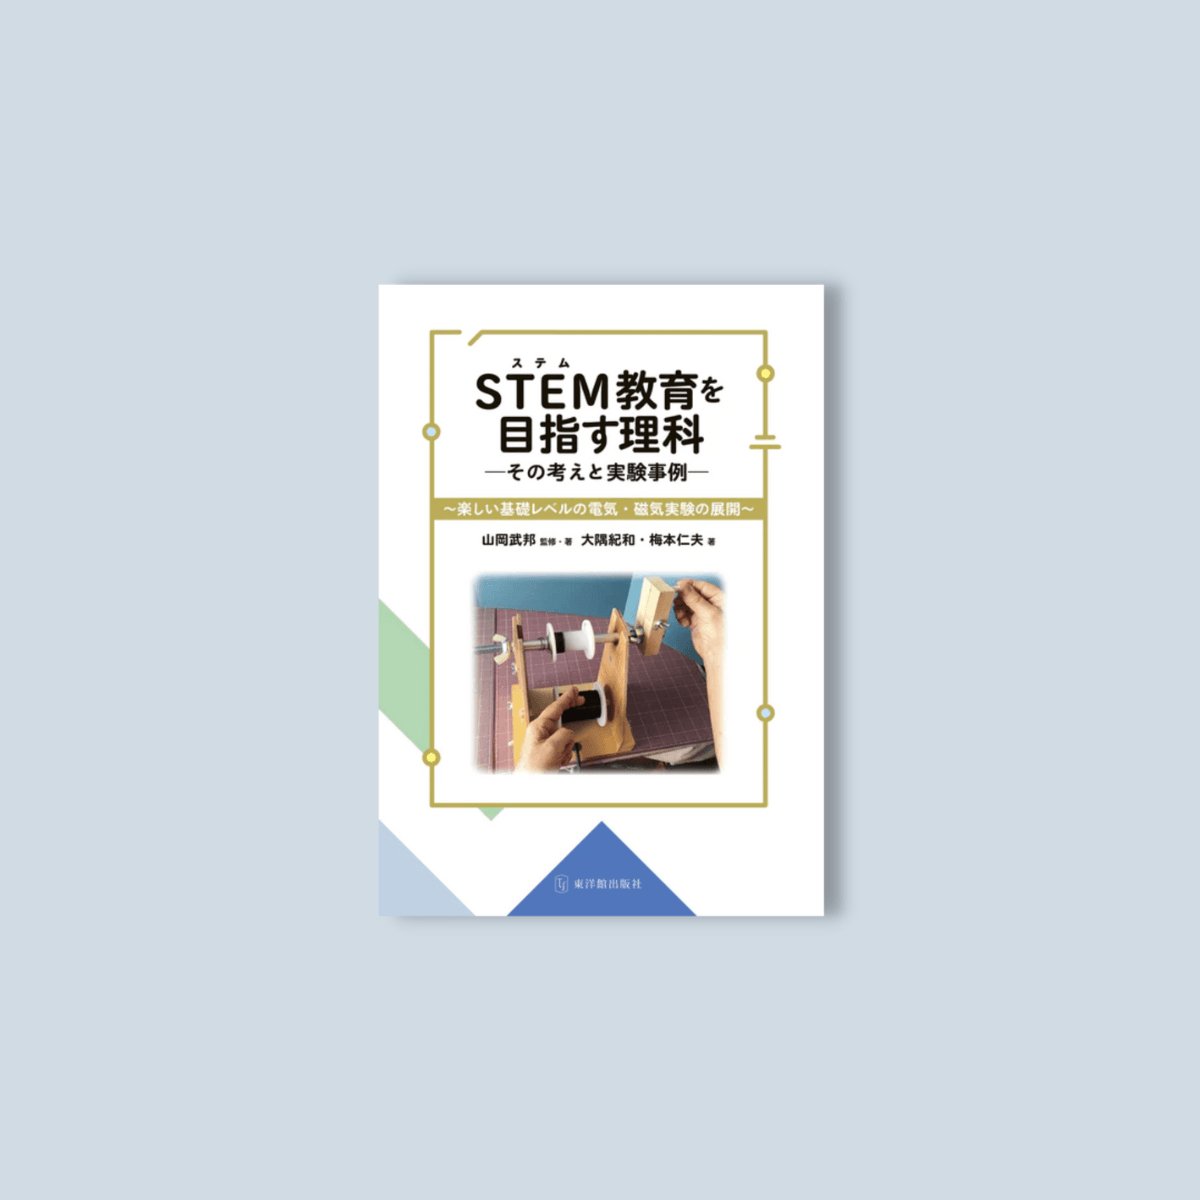 STEM教育を目指す理科-その考えと実験事例 - 東洋館出版社